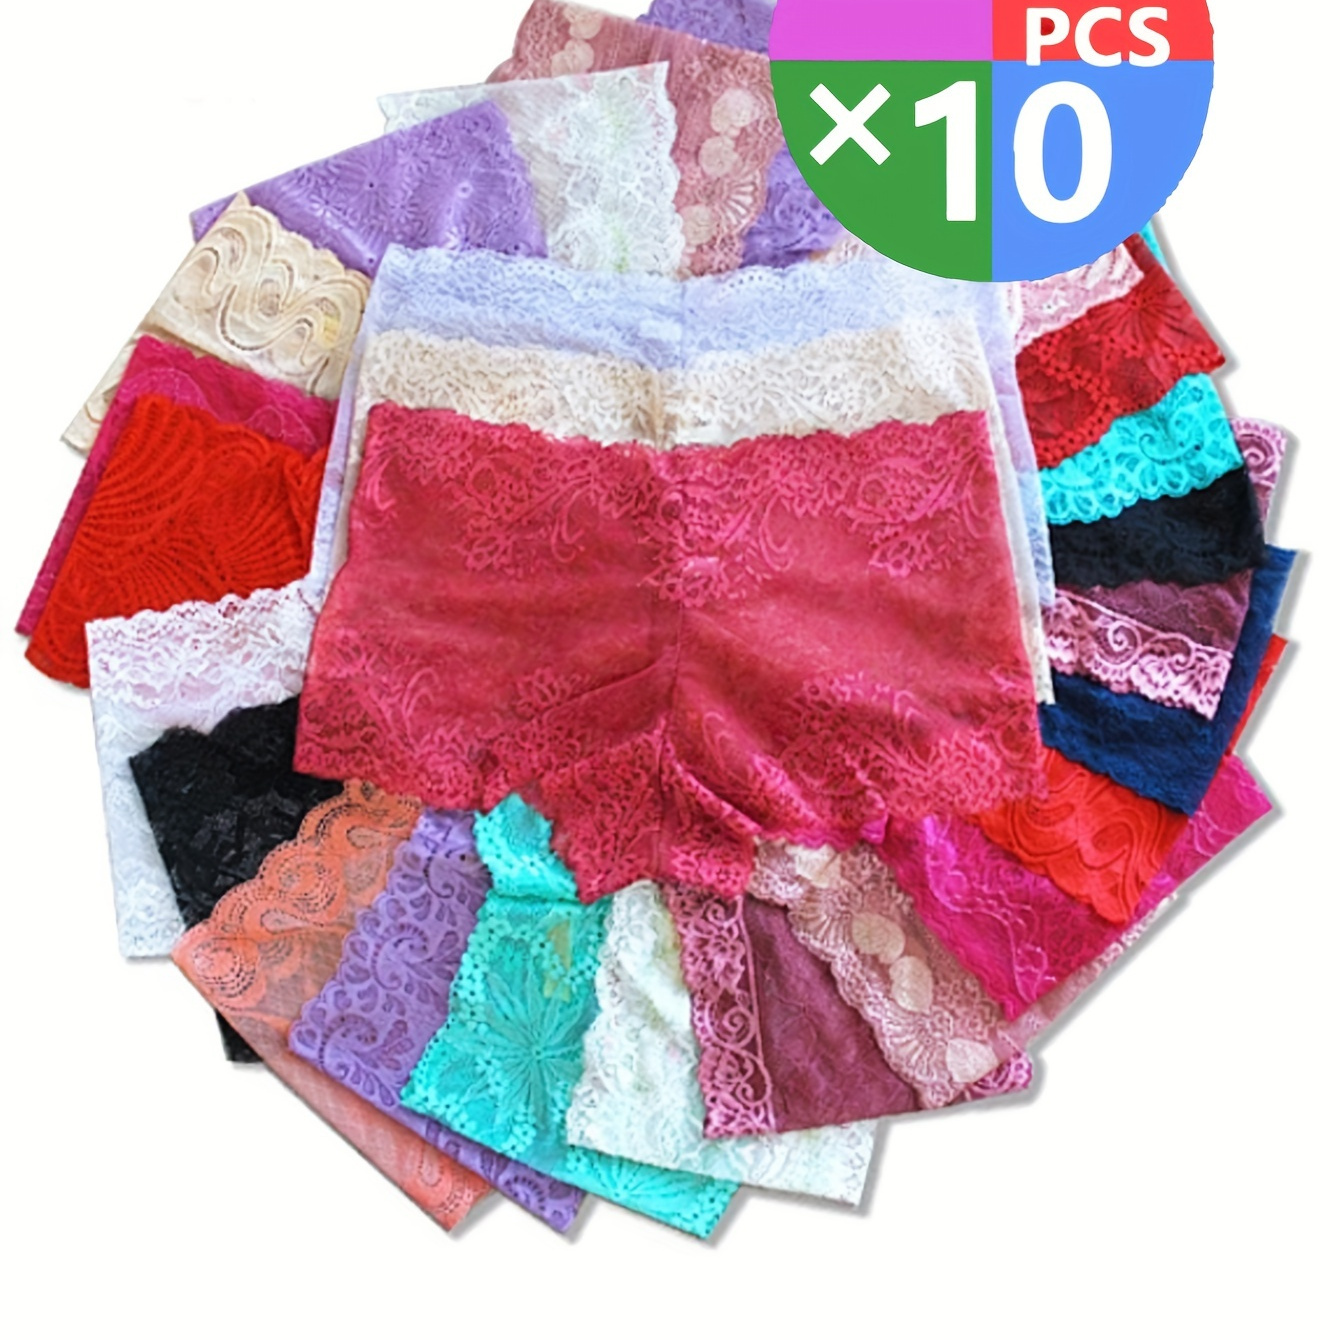 

10 Pack Women's Plus Size Assorted Colors Sexy Lace Panties, Breathable Underwear Briefs, Comfort Fit Lingerie